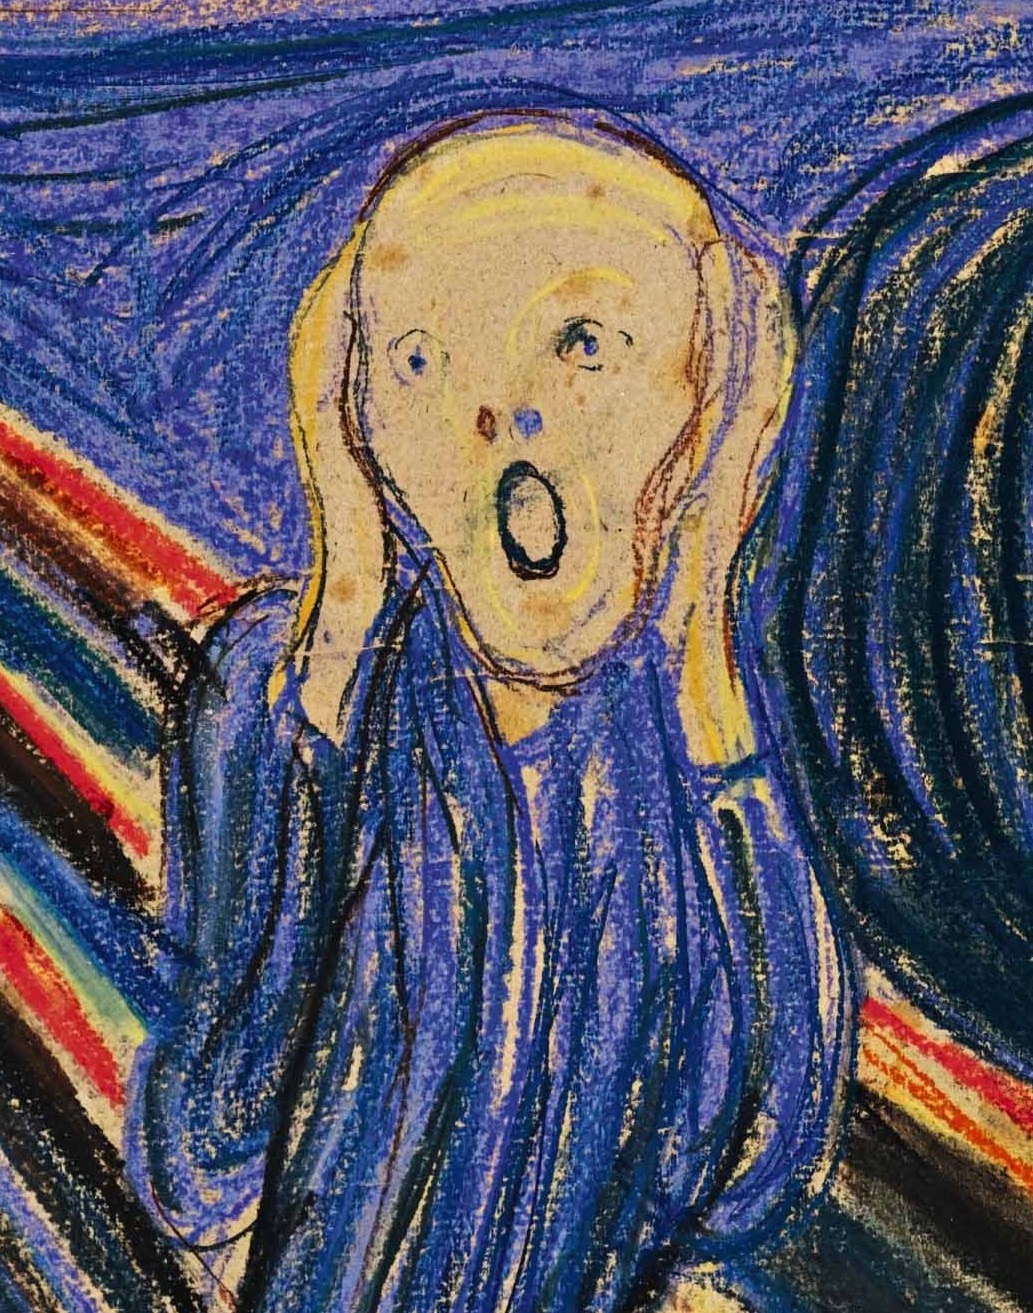 "The Scream" by Munch